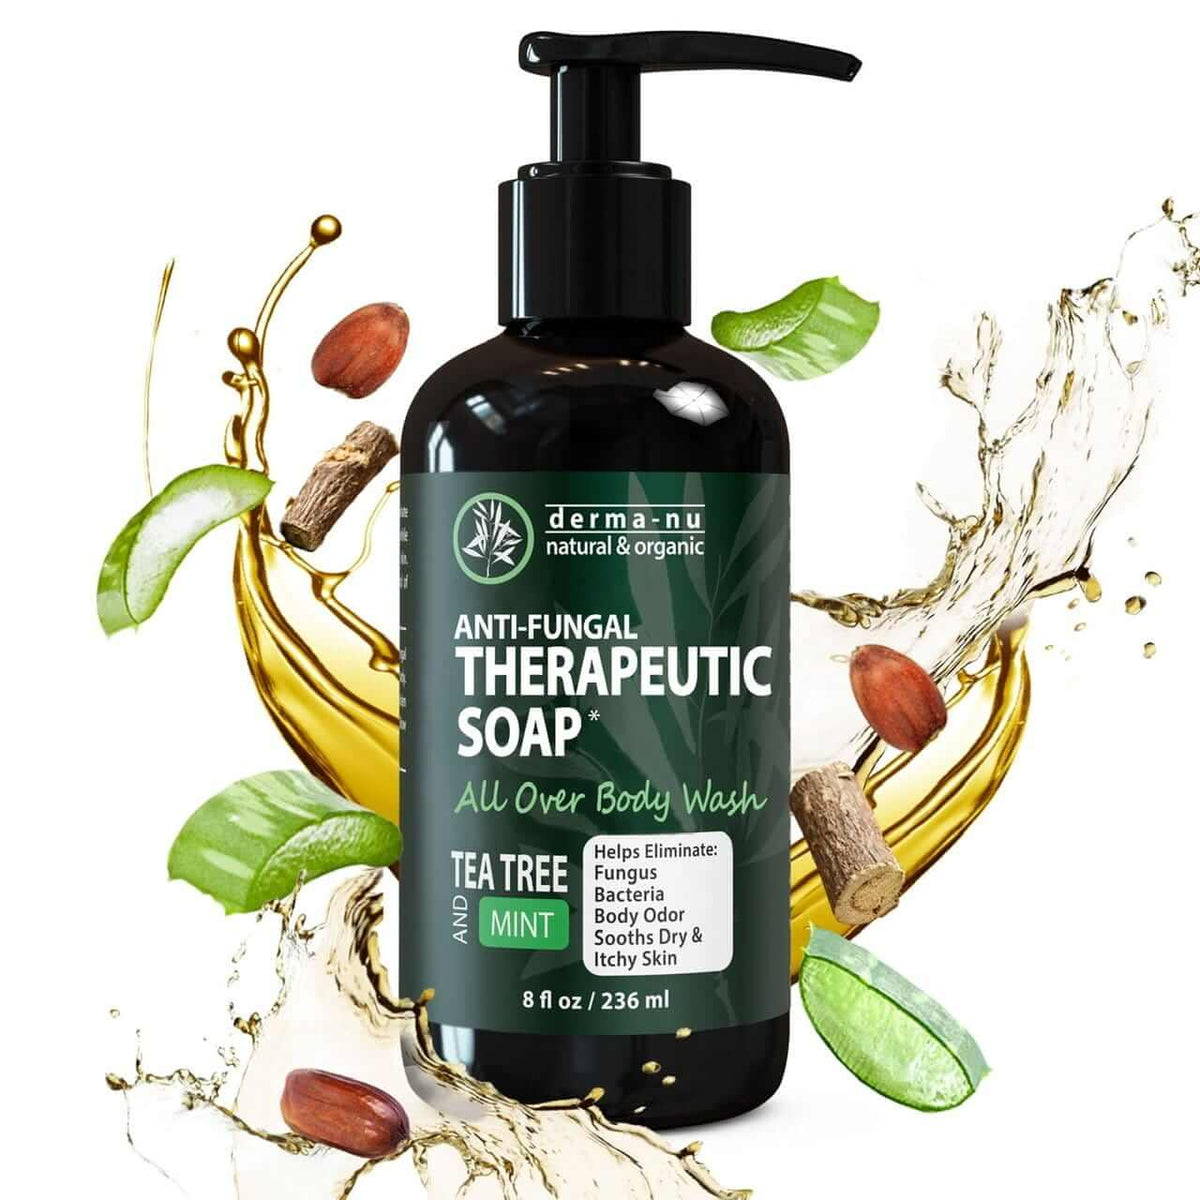 Anti-Fungal THERAPEUTIC SOAP